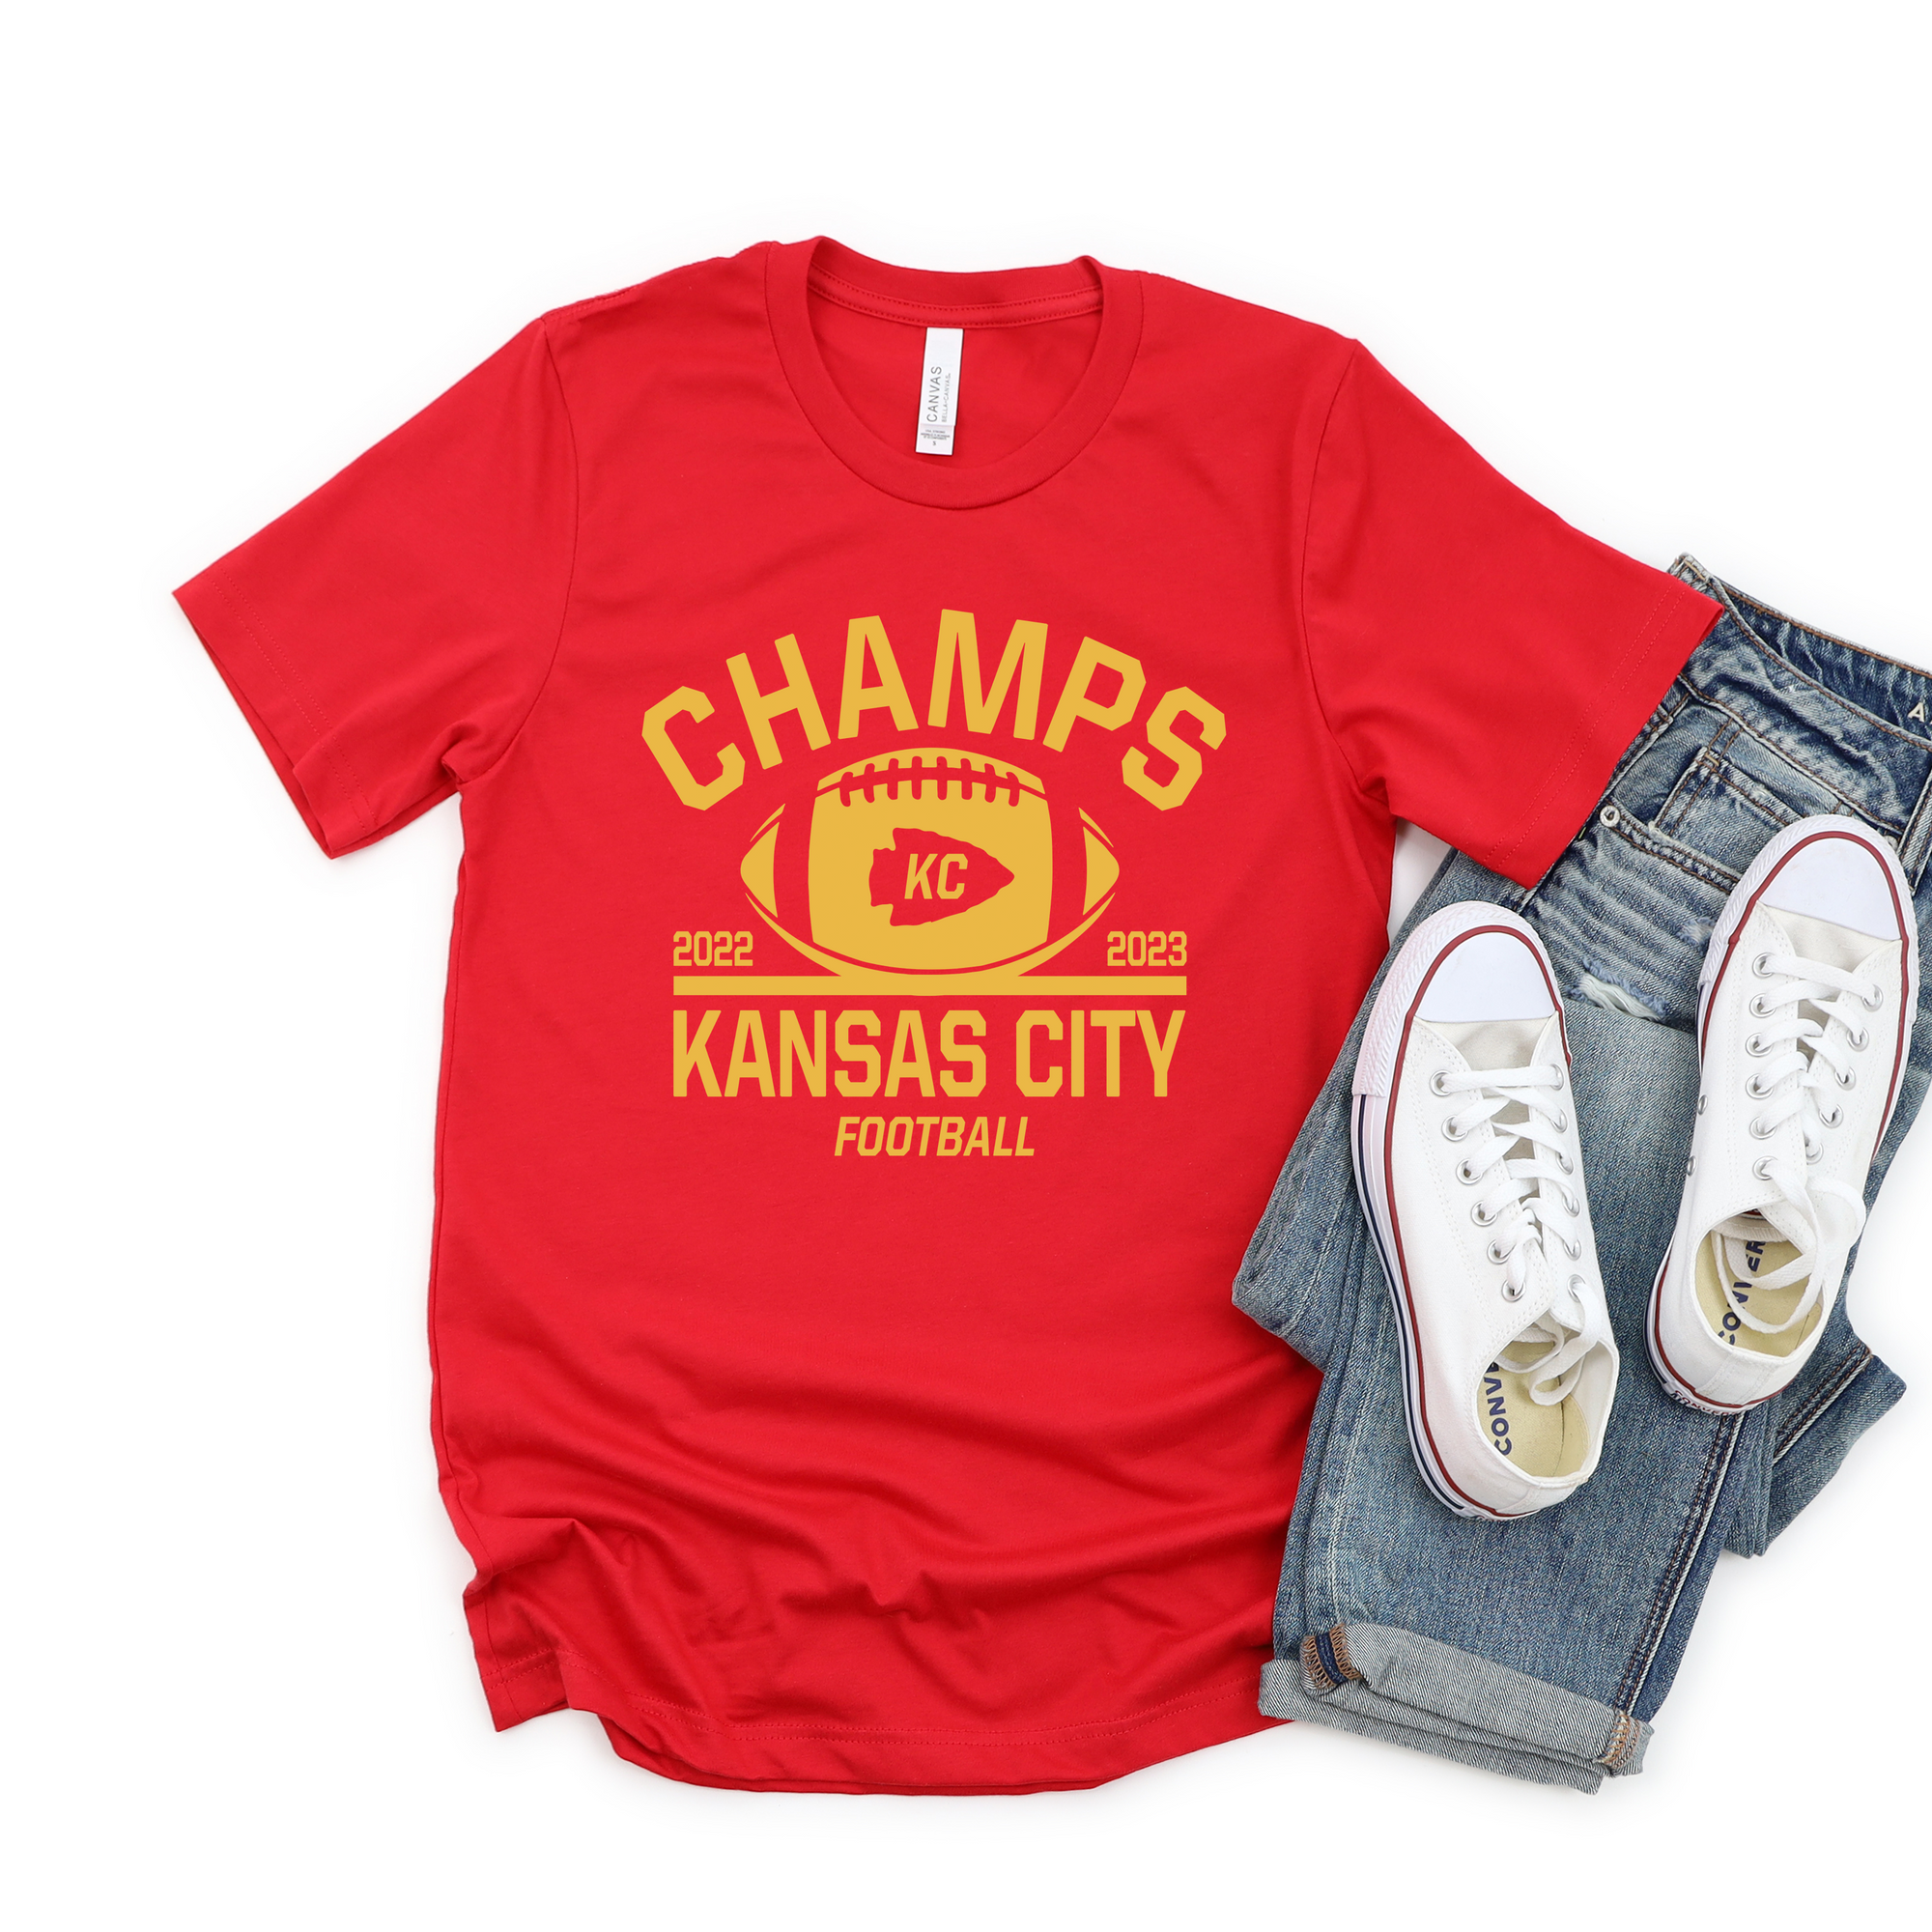 Champs Kansas City Football Tee or Sweatshirt